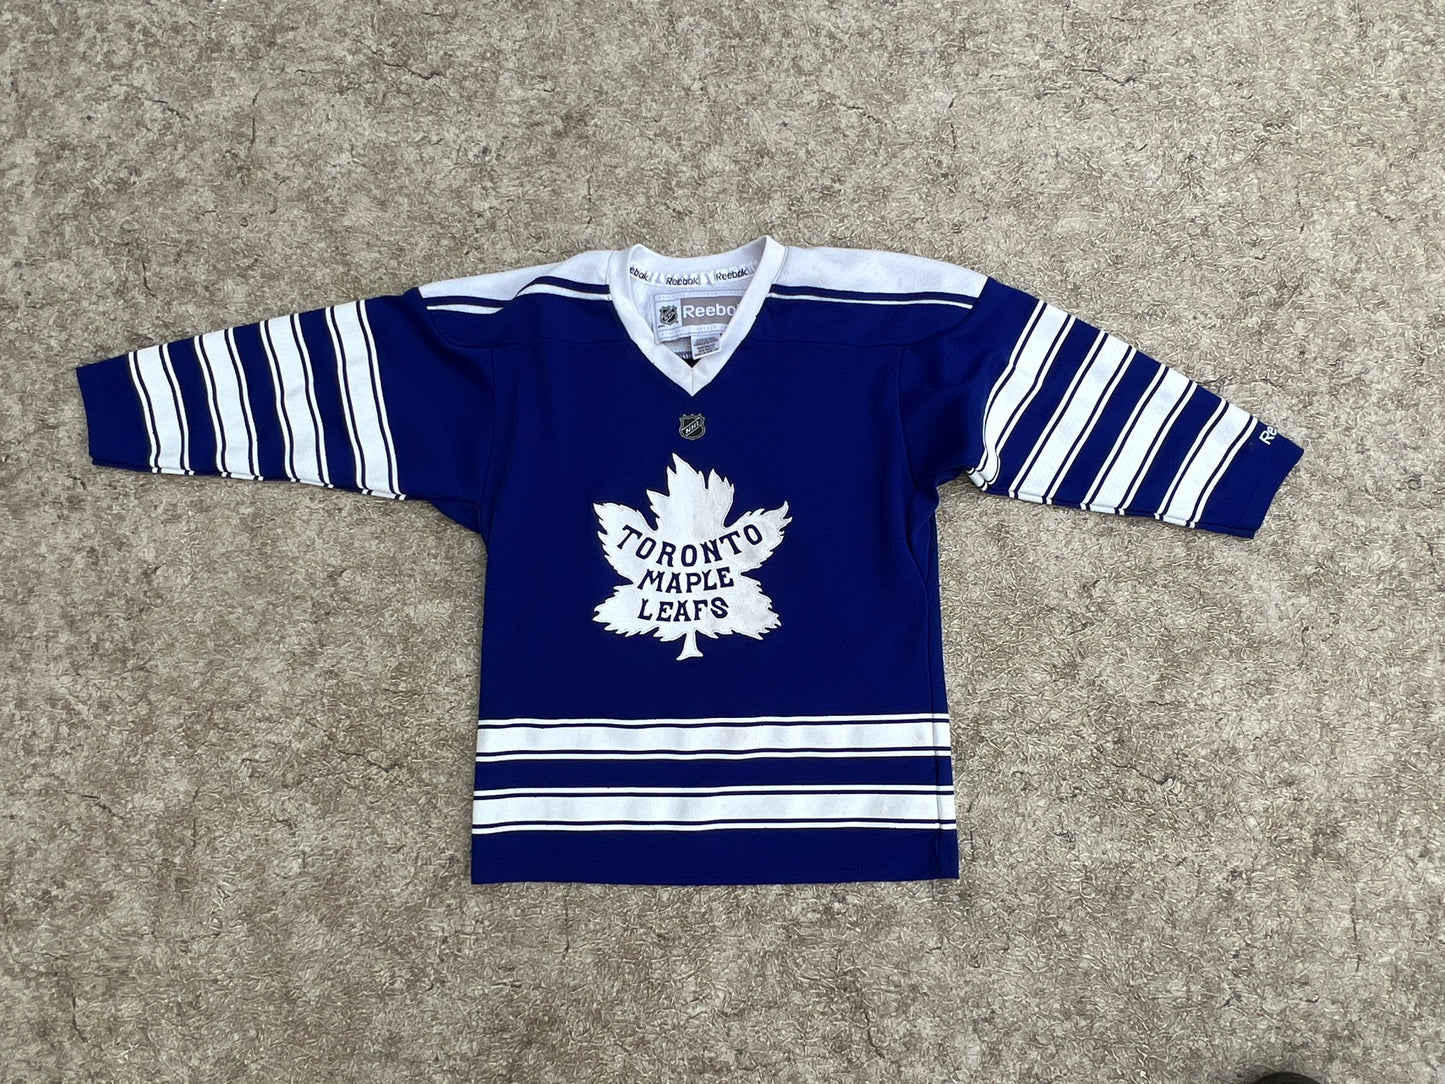 Hockey Jersey Child Size 4-7 Reebok Toronto Maple Leaf Blue White As New